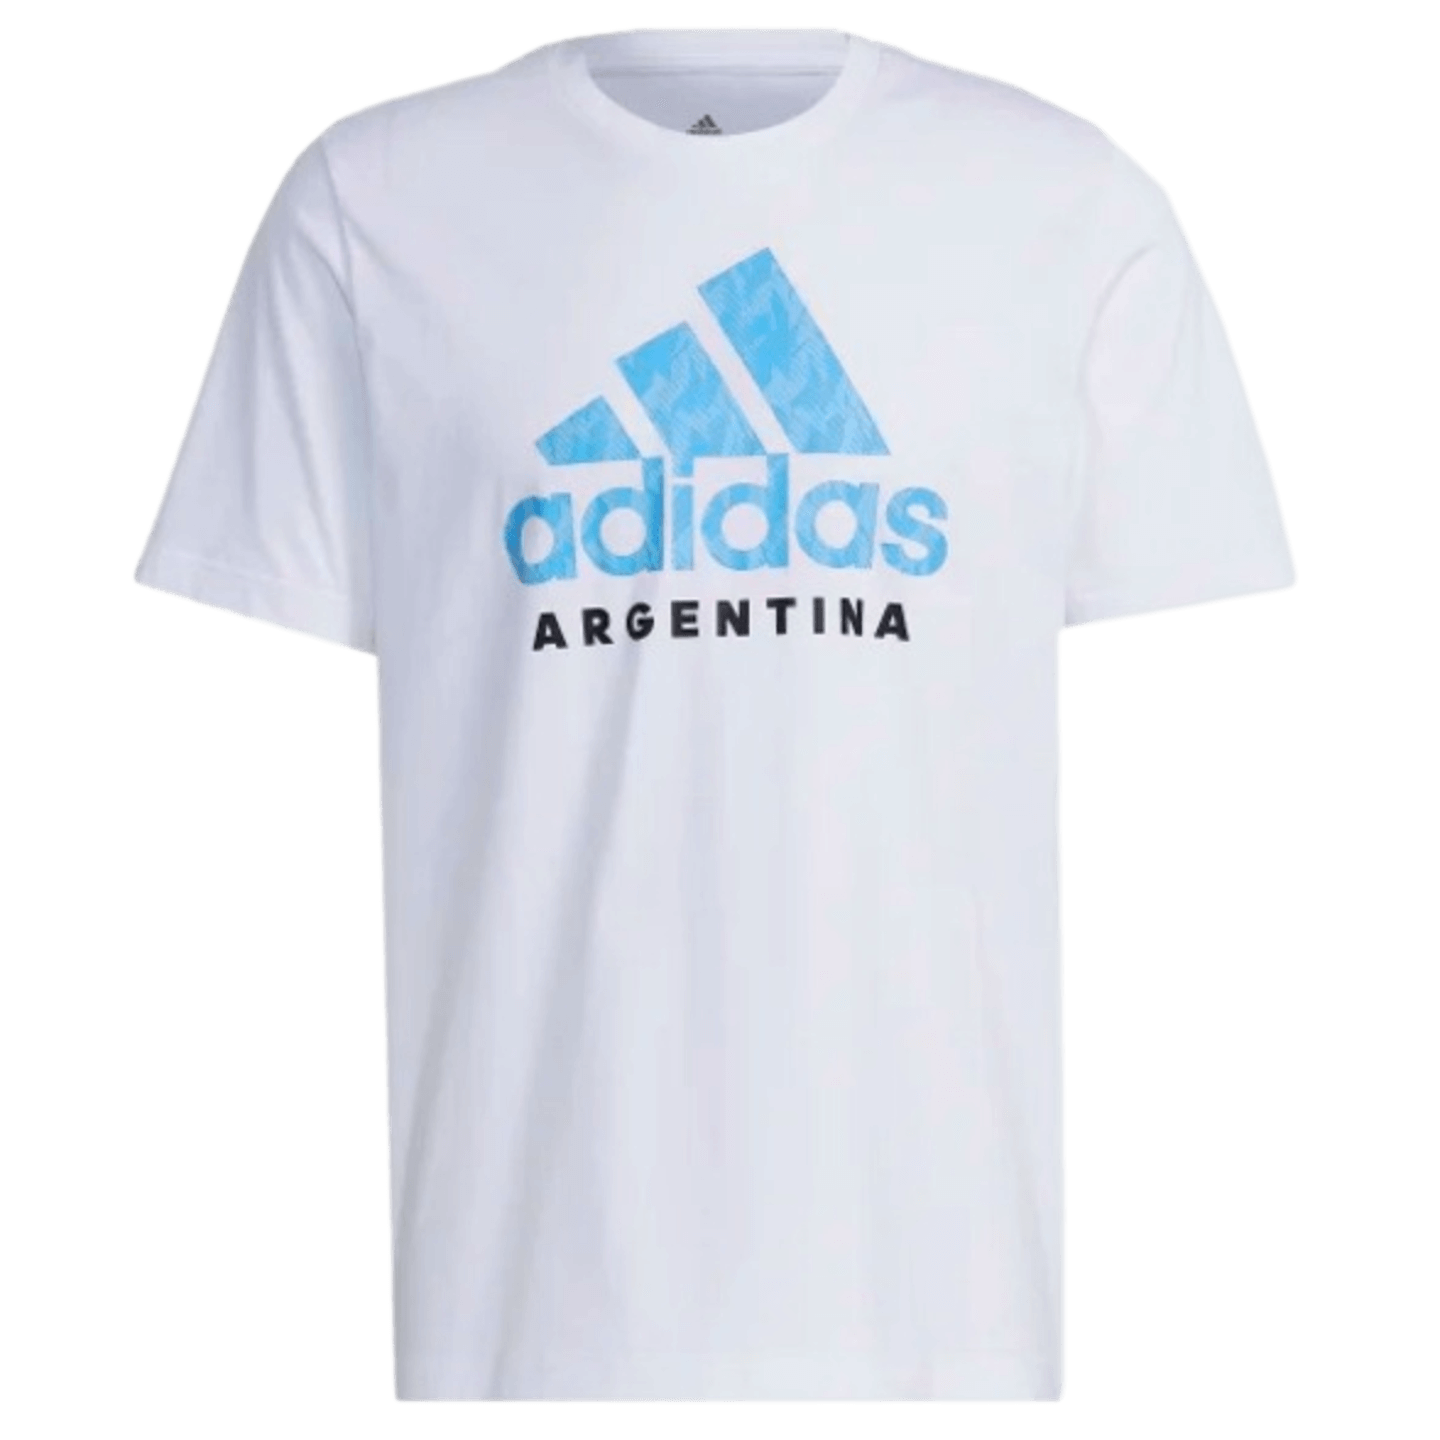 Adidas Argentina DNA Graphic Tee